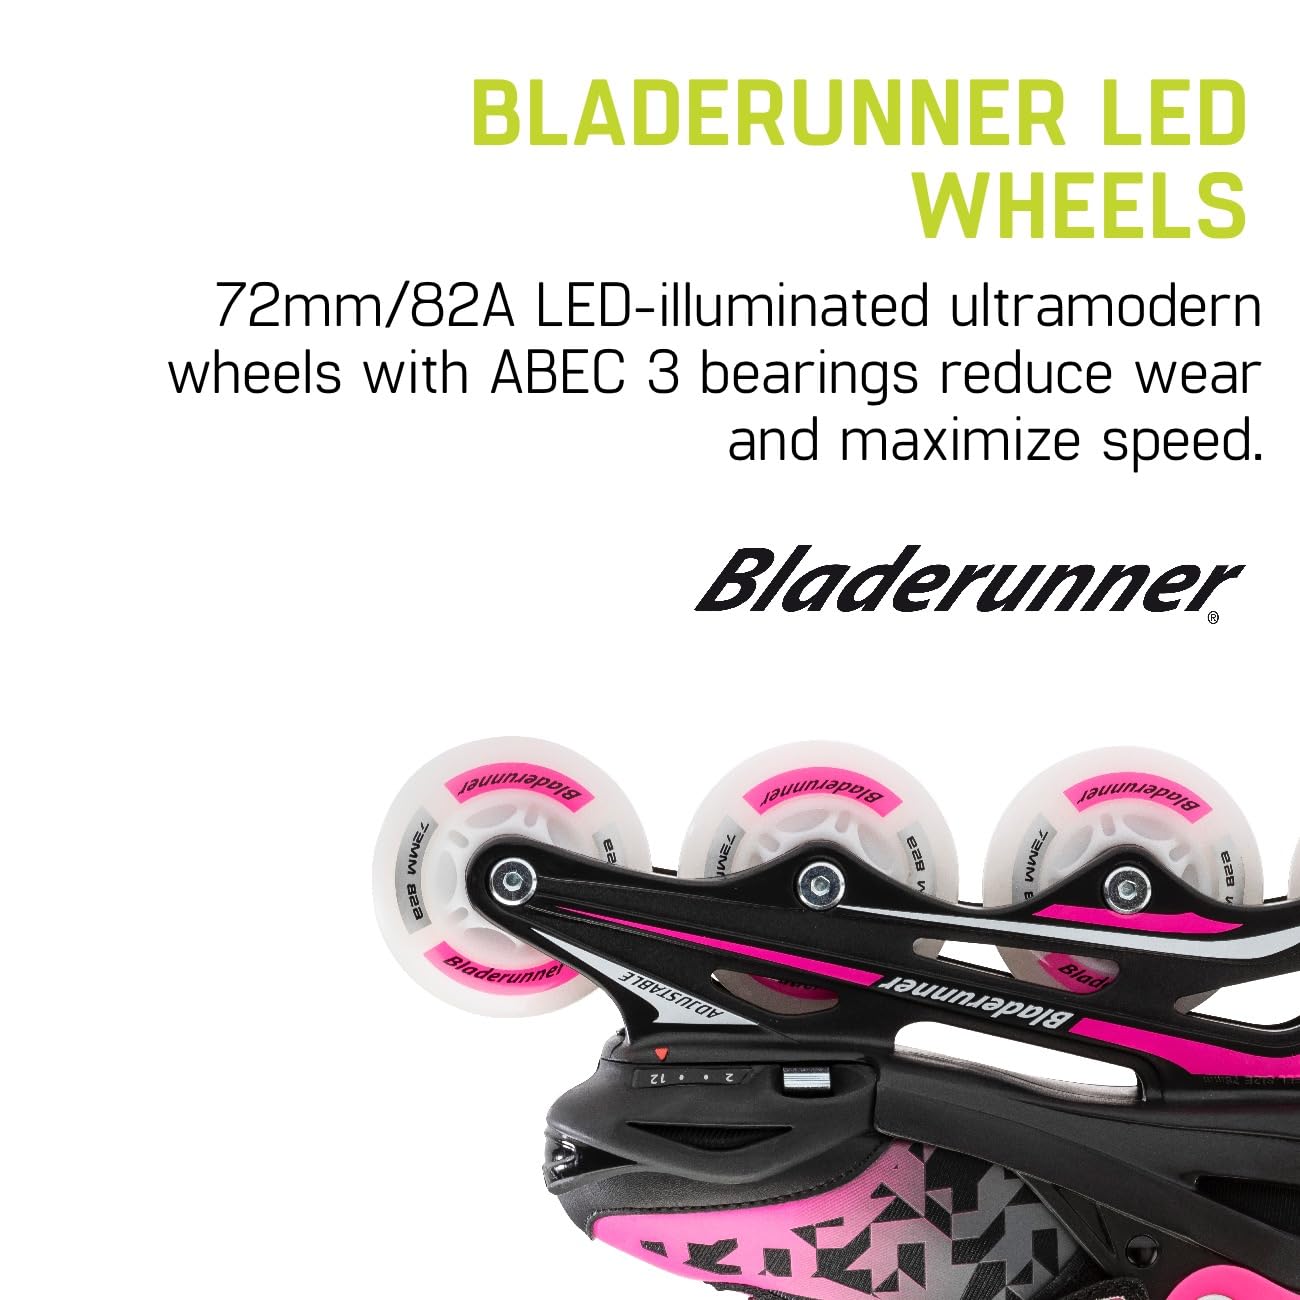 Bladerunner by Rollerblade Phoenix Flash Kid's Adjustable Fitness Inline Skate, Black/Pink